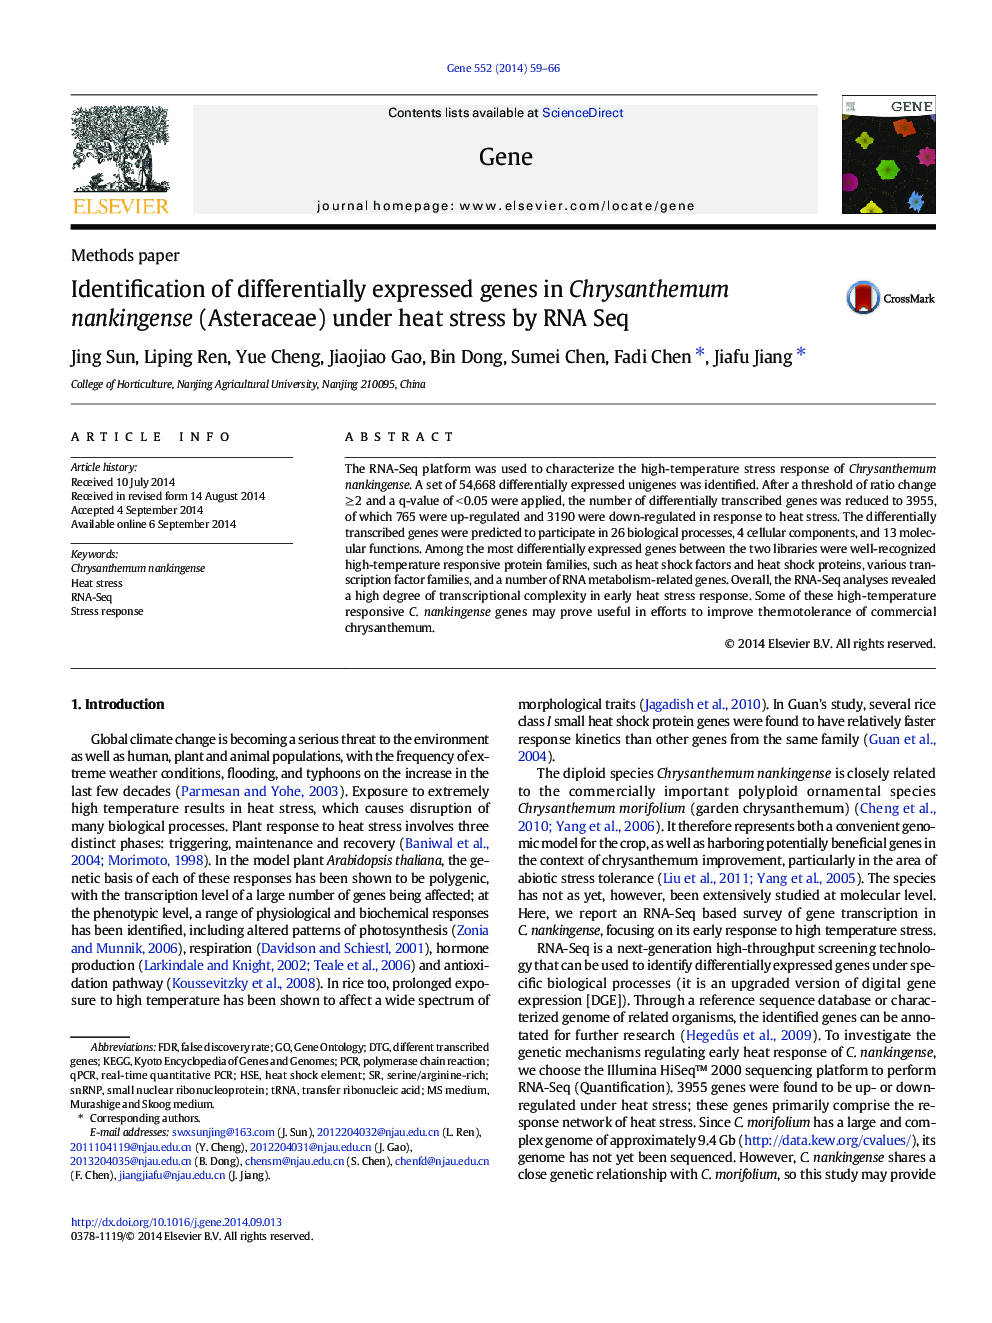 Identification of differentially expressed genes in Chrysanthemum nankingense (Asteraceae) under heat stress by RNA Seq